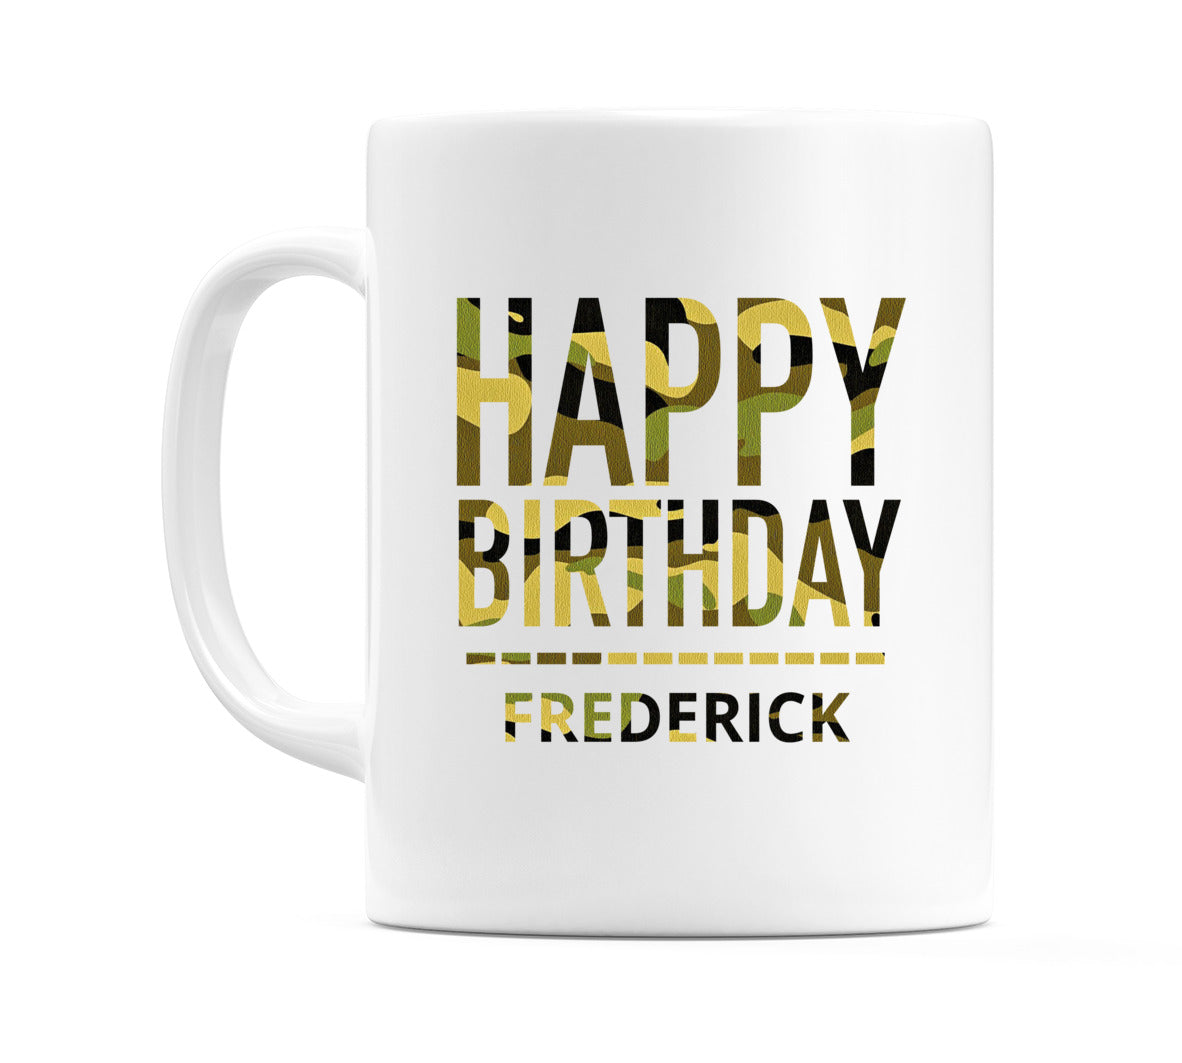 Happy Birthday Frederick (Camo) Mug Cup by WeDoMugs